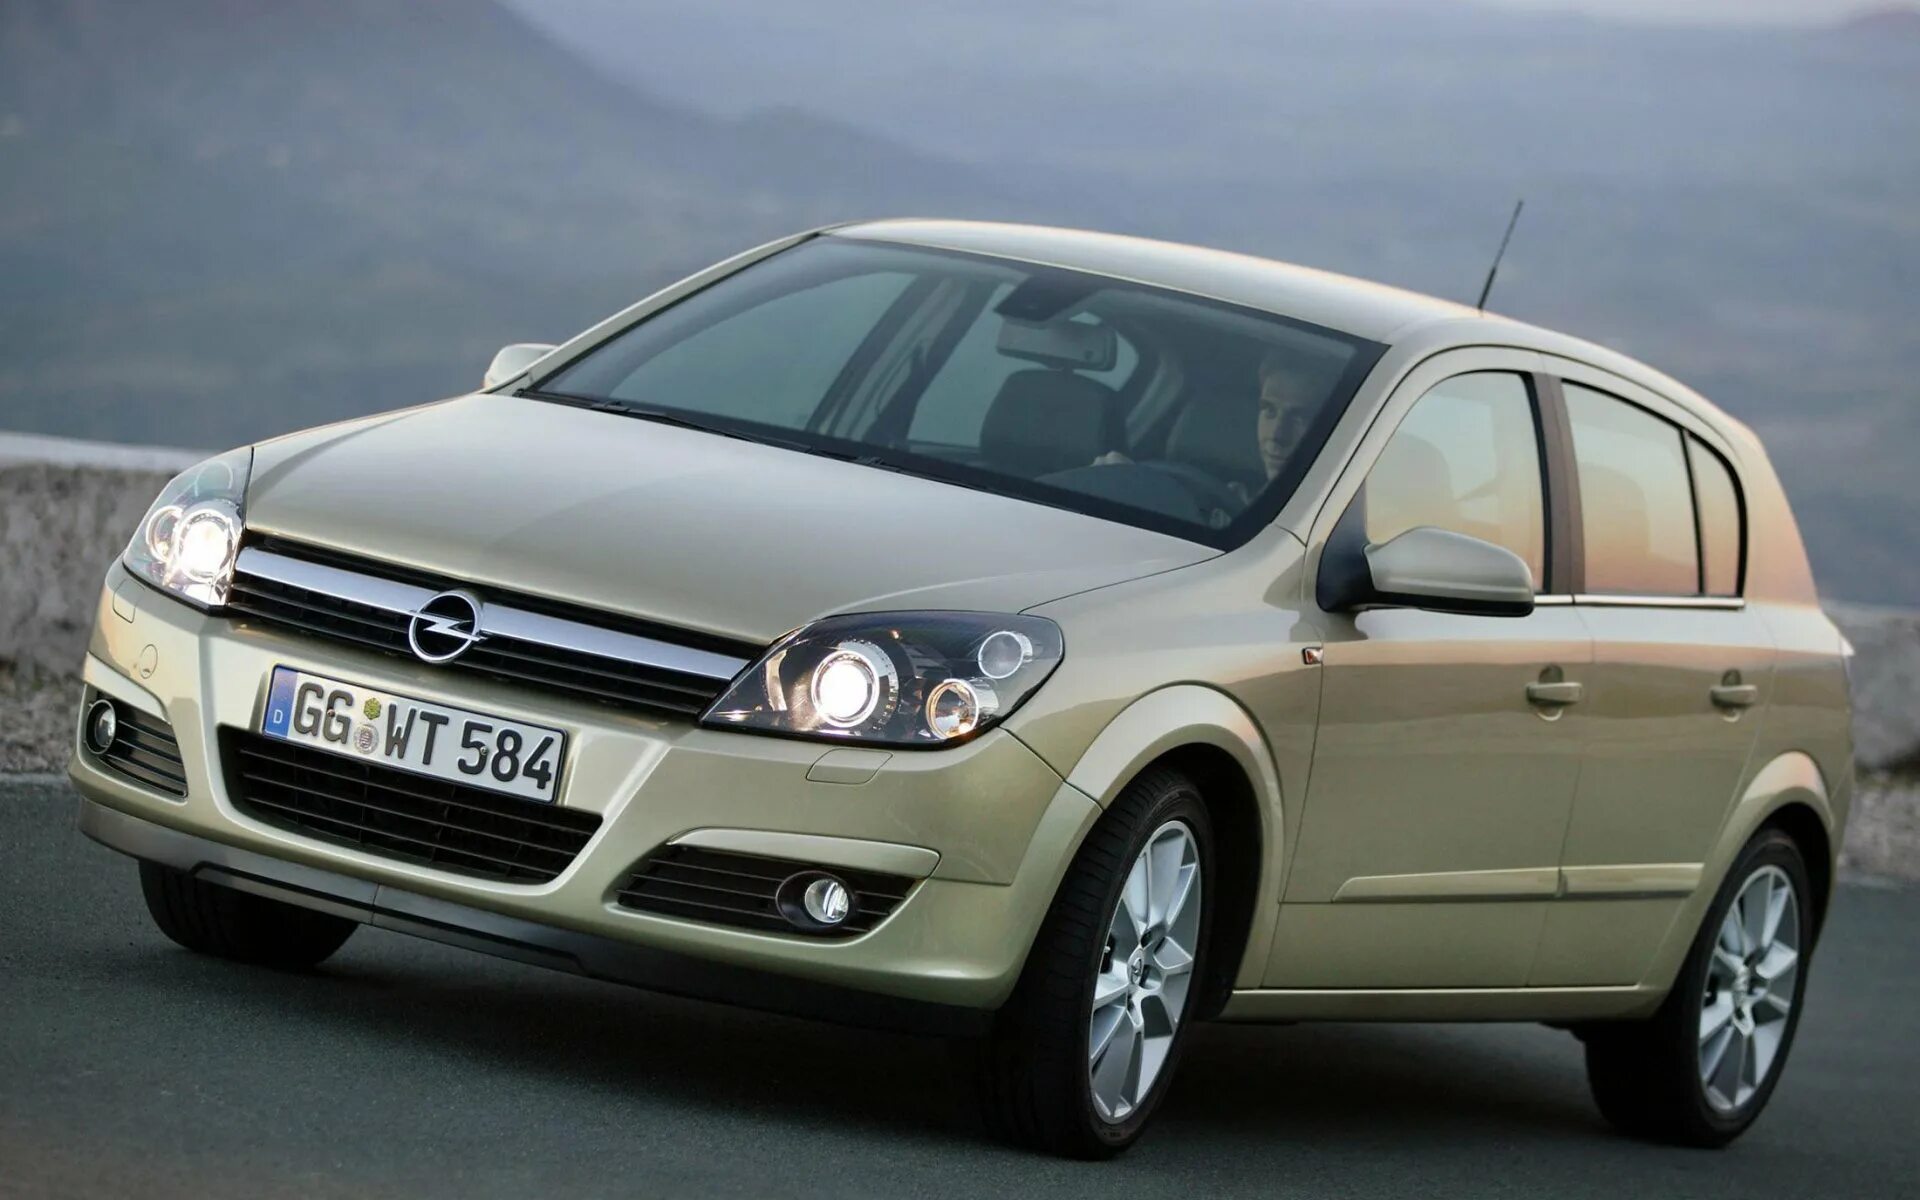 Opel Astra h 2006. Opel Astra h 2006 хэтчбек. Opel Astra h 2006 1.8. Opel Astra 1.4 2006. Opel h 2006